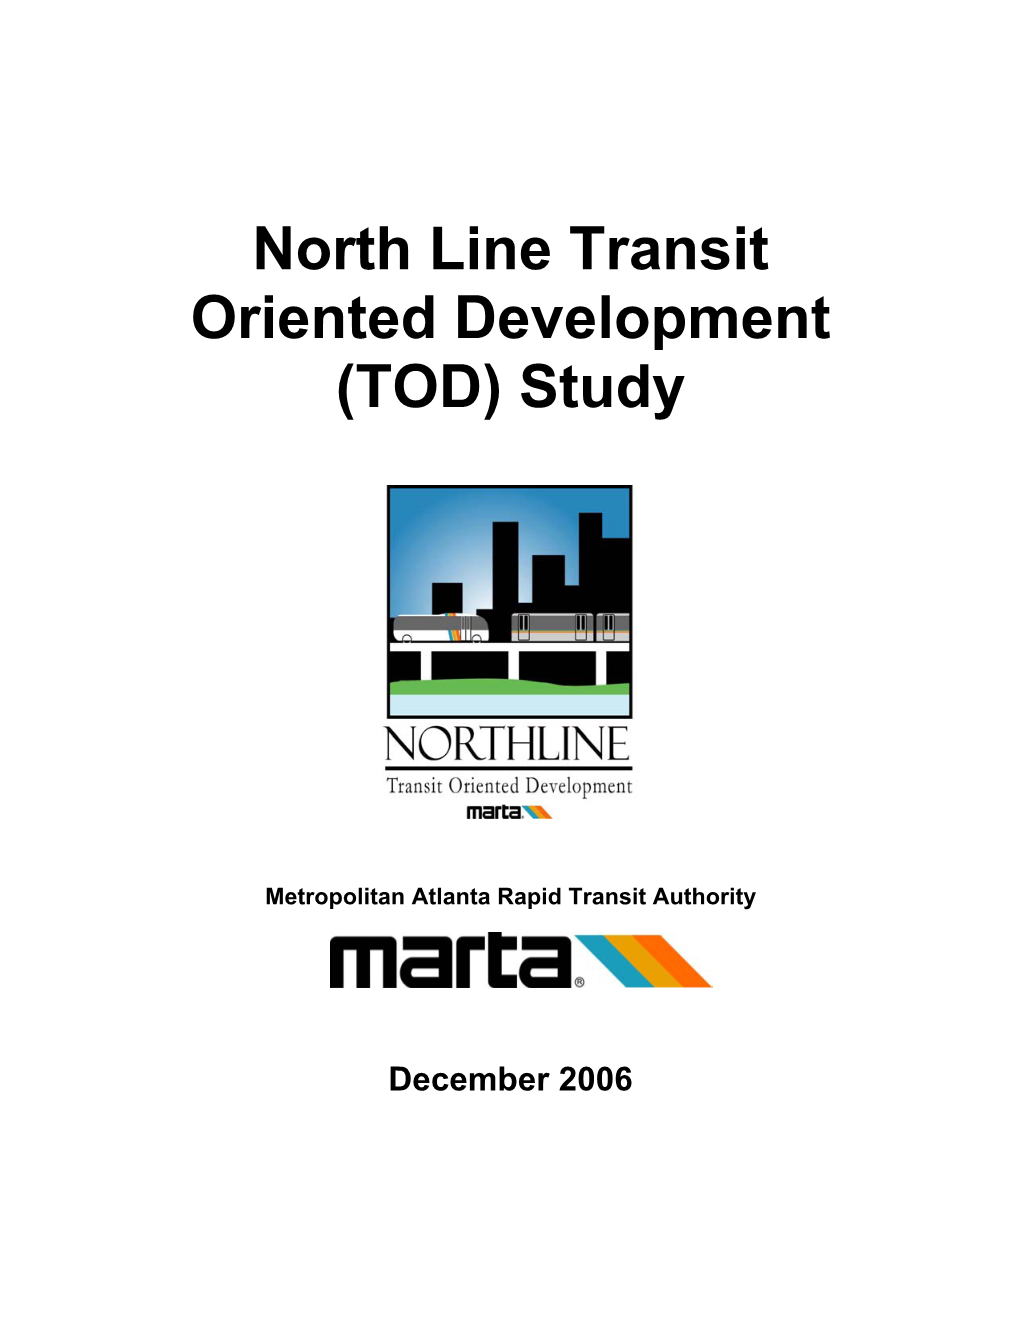 North Line Transit Oriented Development (TOD) Study